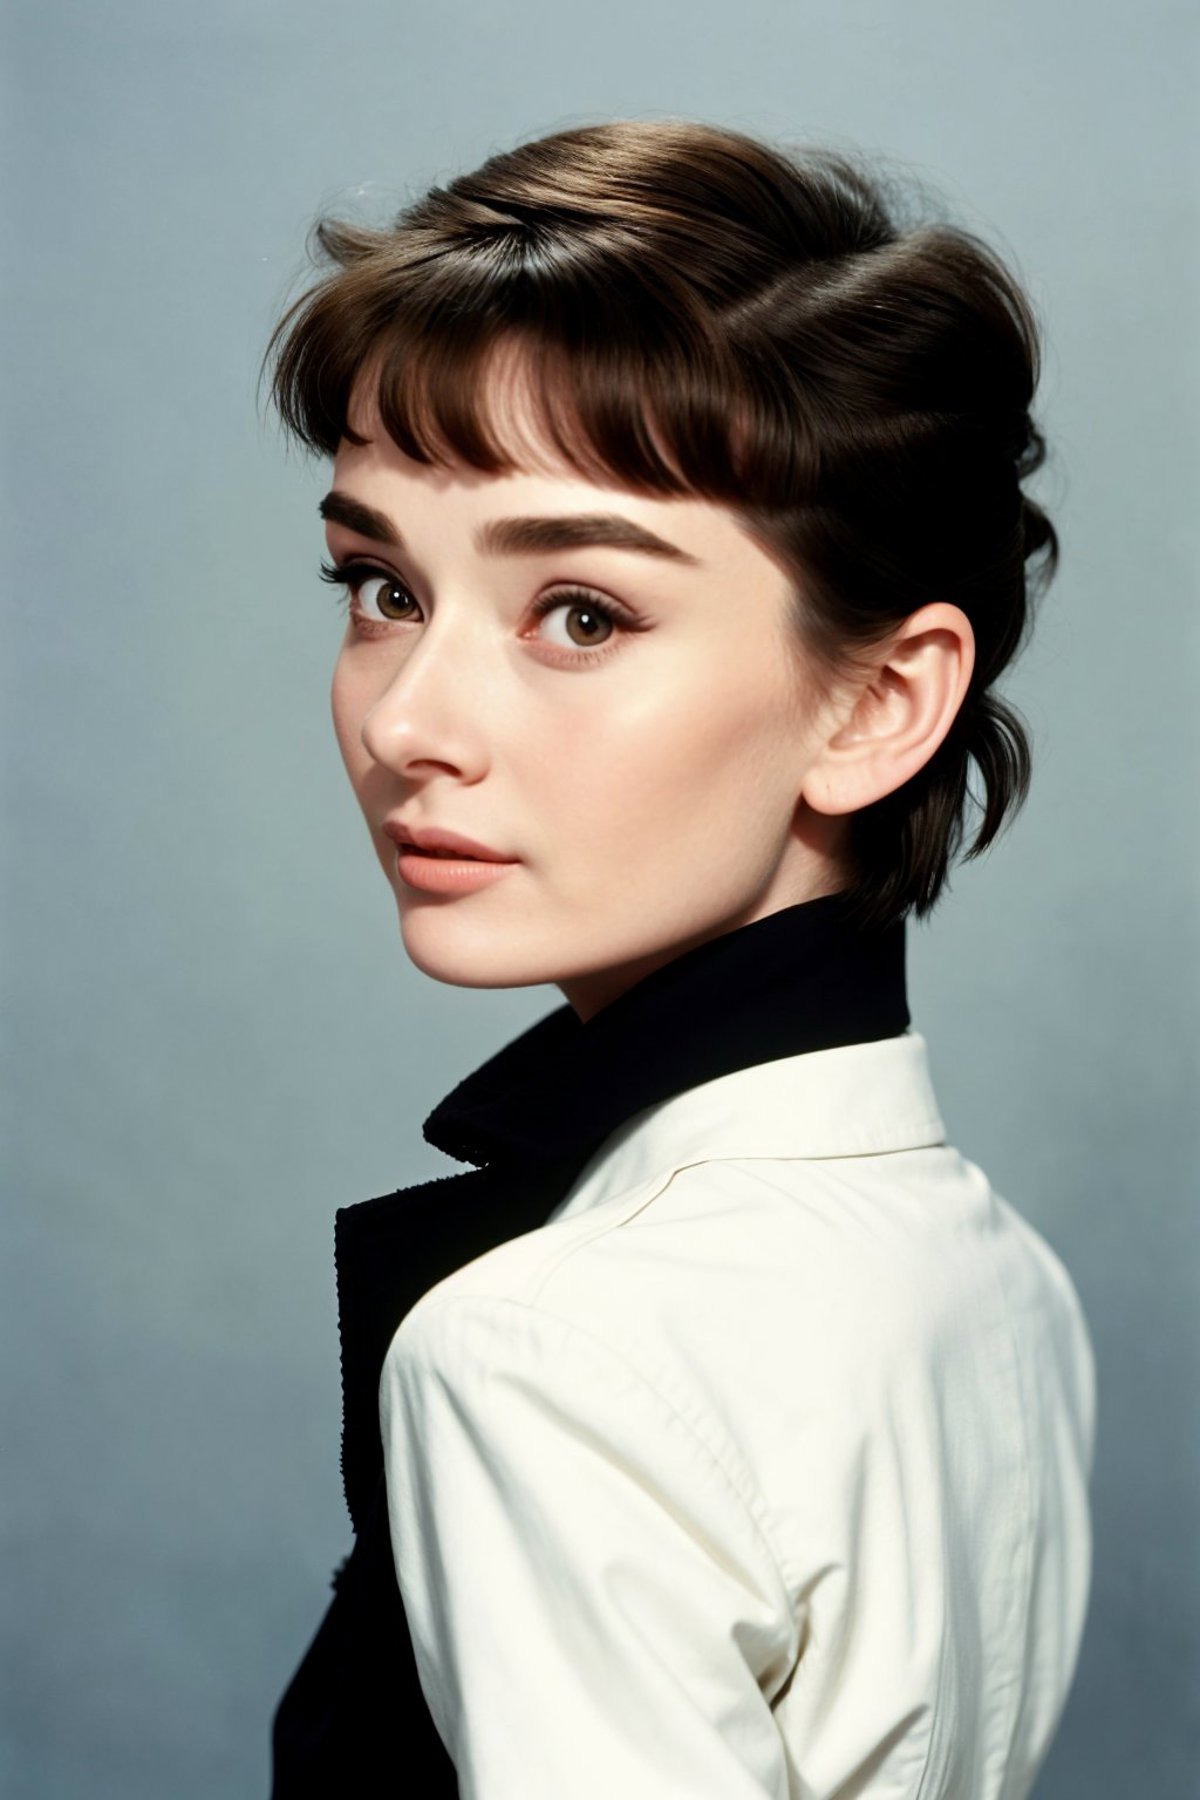 Audrey Hepburn image by demoran